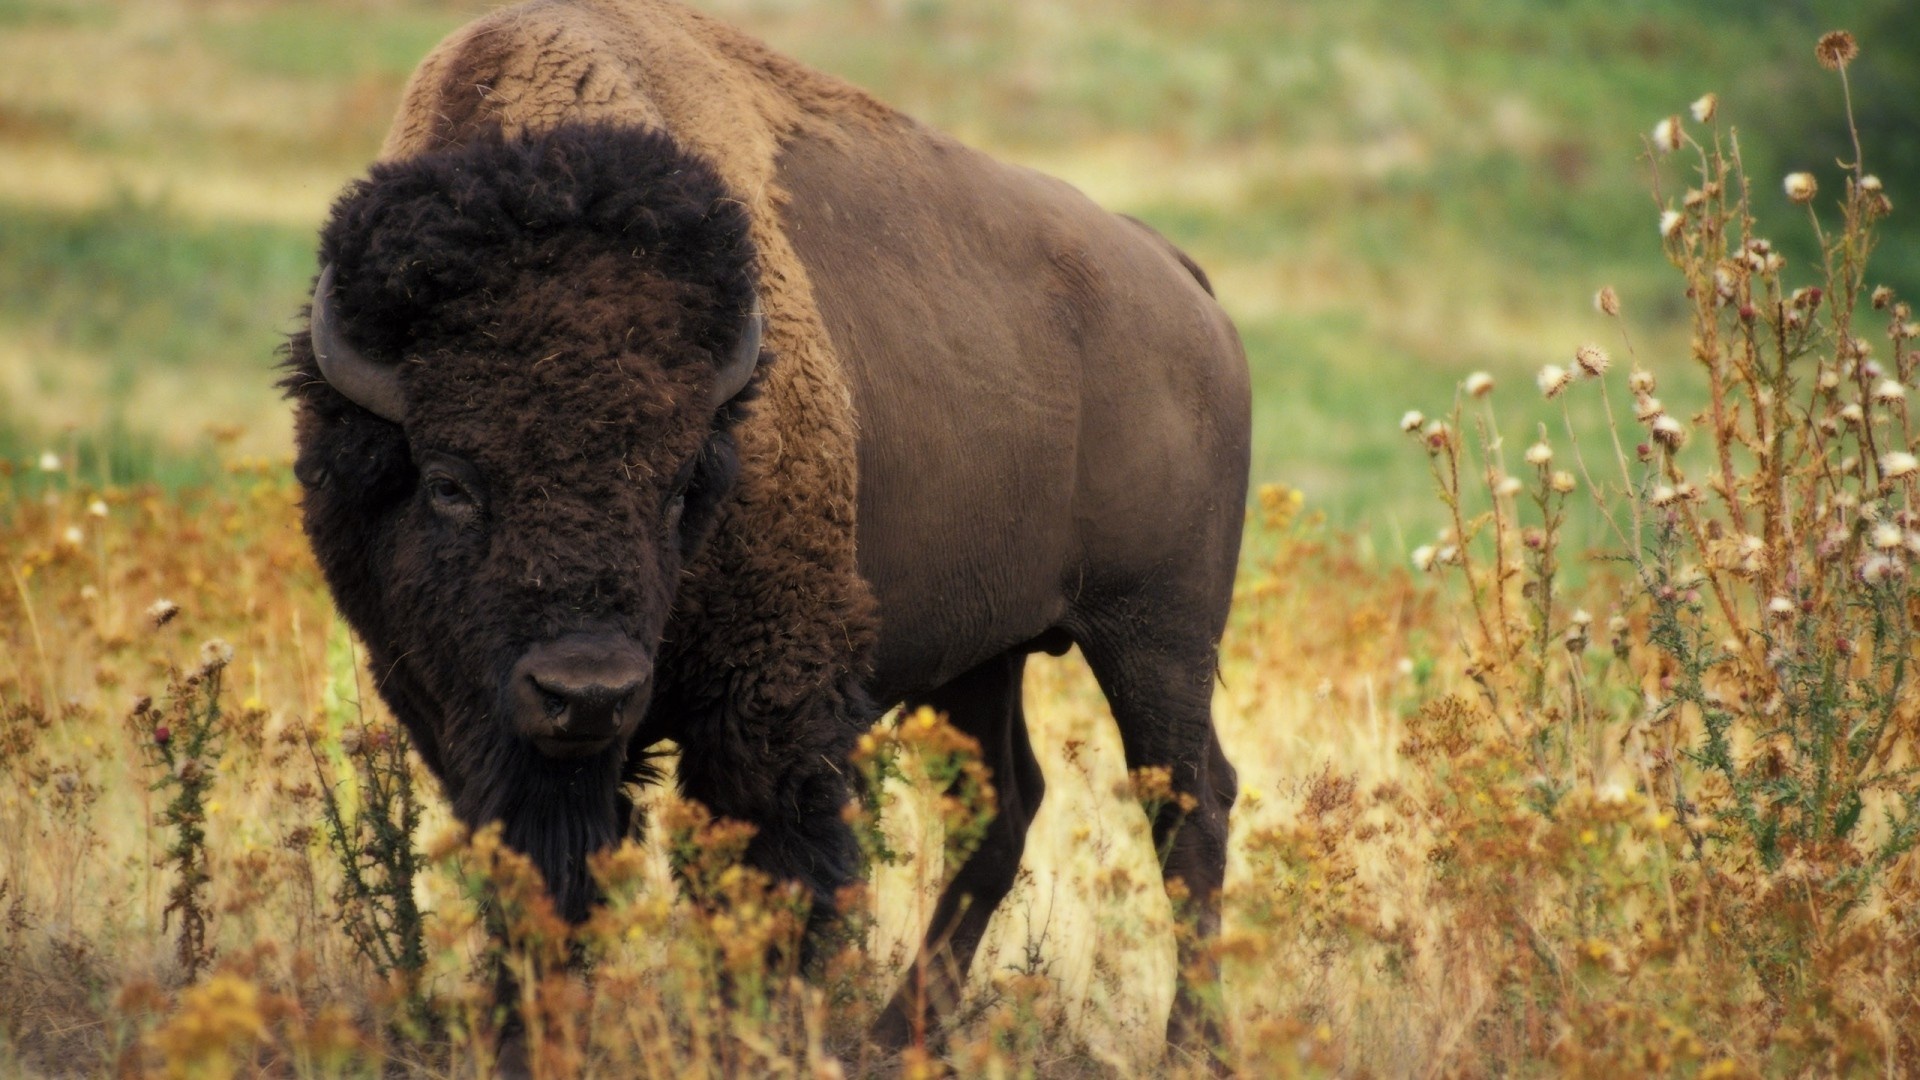 HD bison wallpaper, Majestic animal imagery, Untamed wilderness, Wildlife wonder, 1920x1080 Full HD Desktop